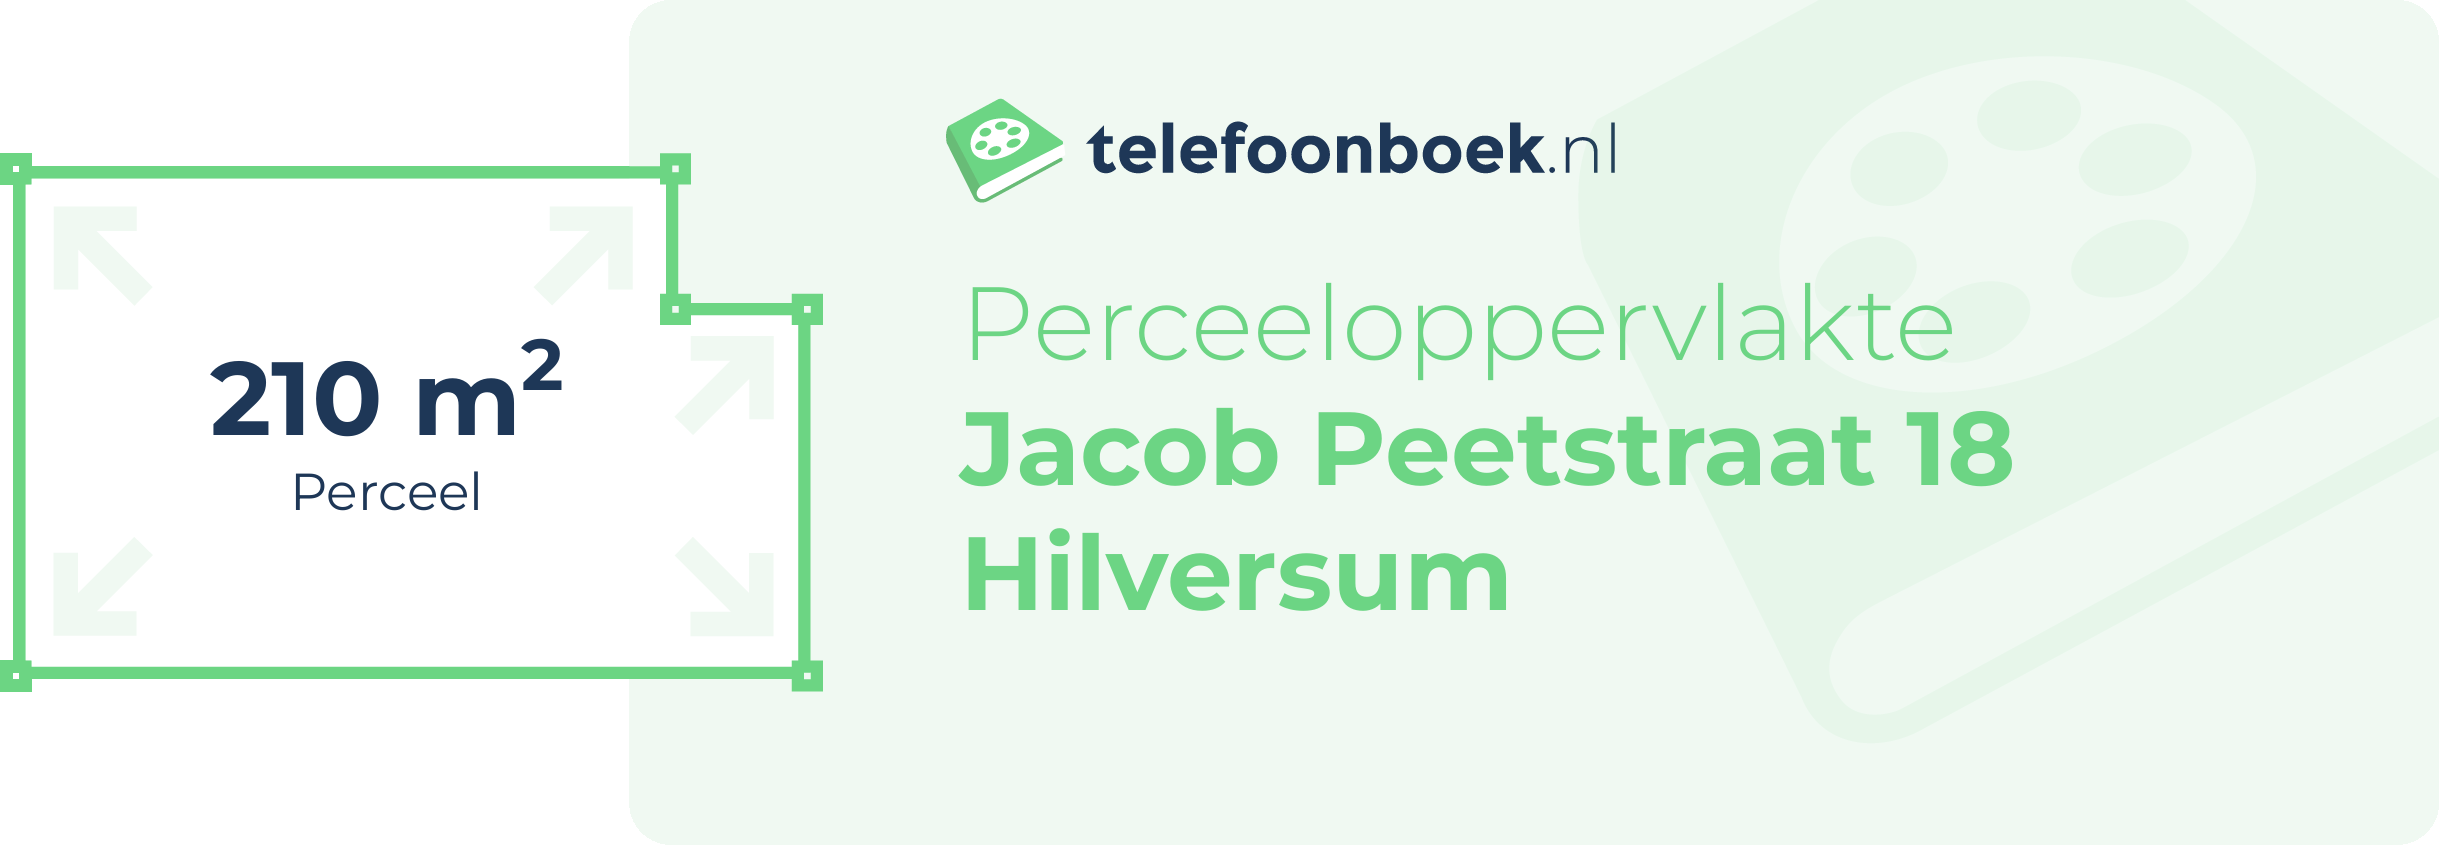 Perceeloppervlakte Jacob Peetstraat 18 Hilversum